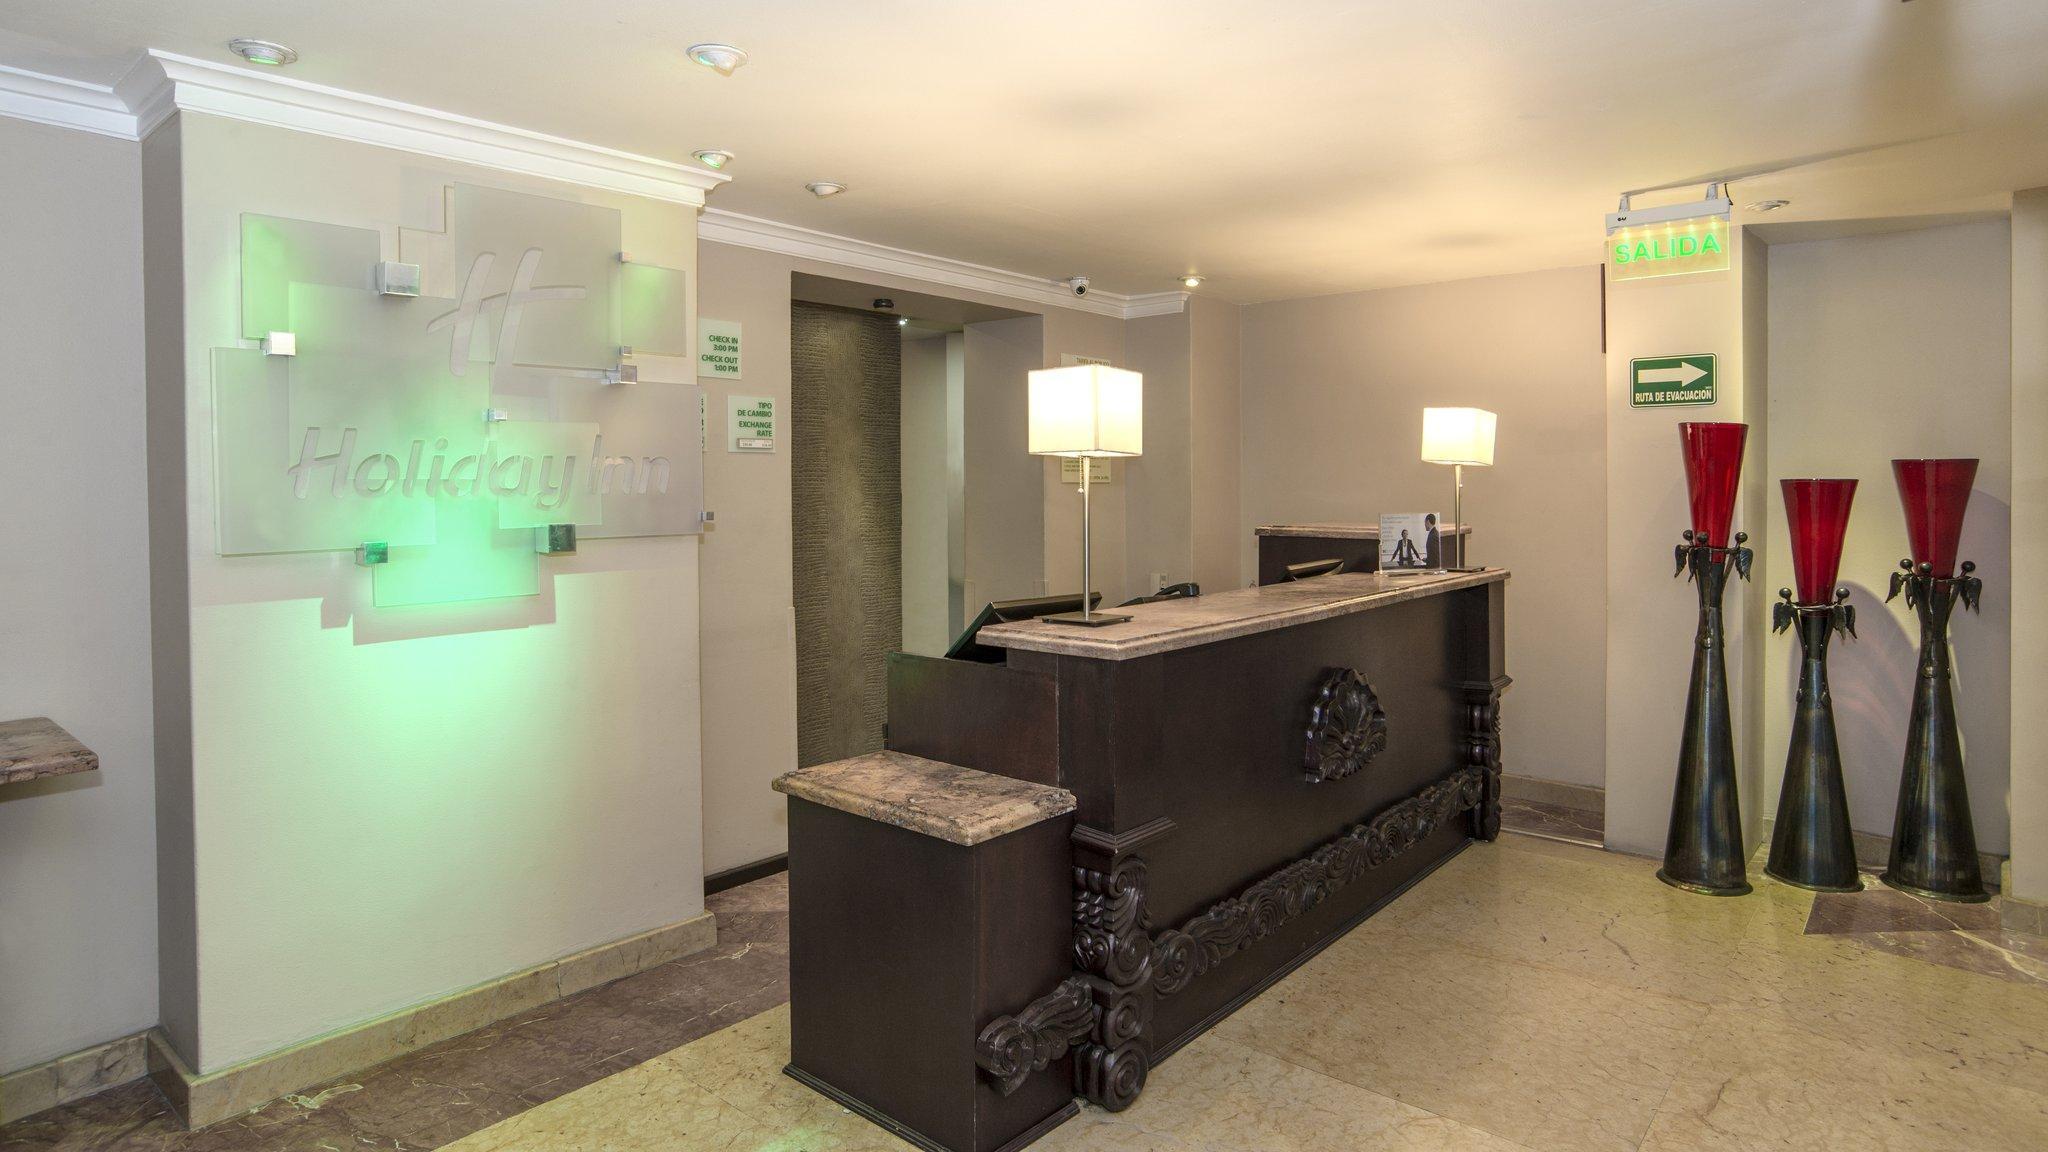 Holiday Inn & Suites Mexico Zona Reforma 写真